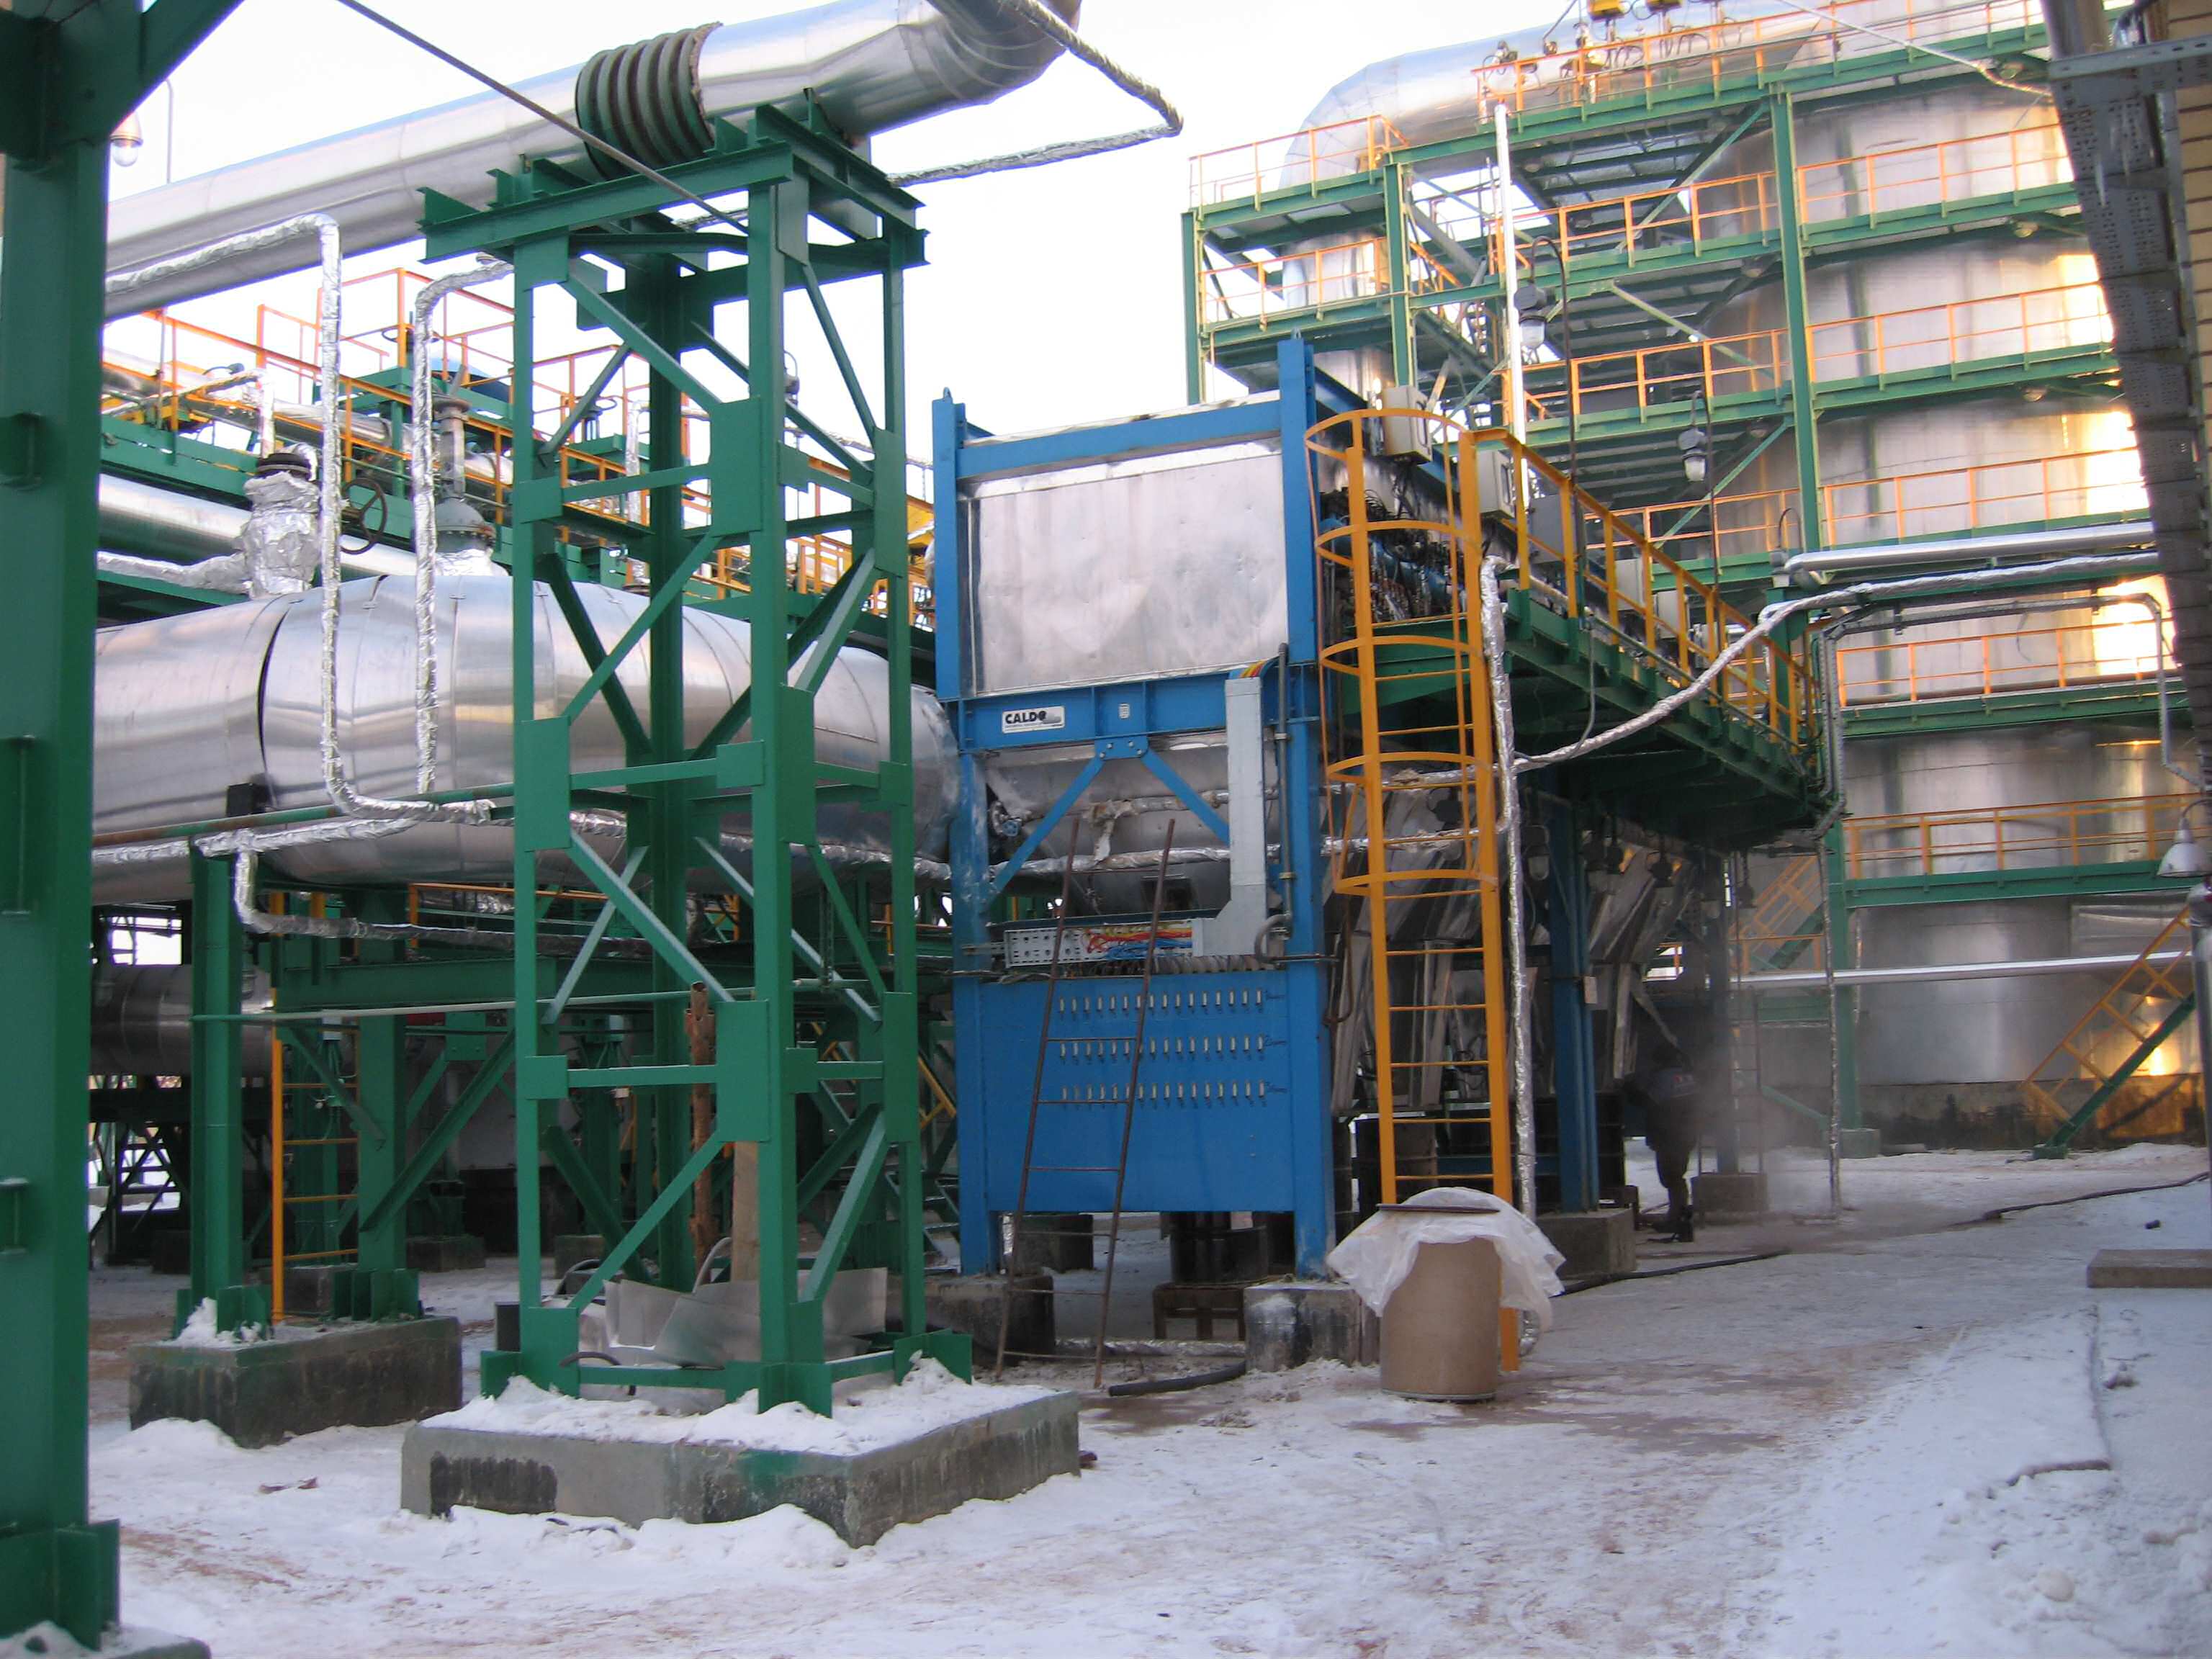 Caldo Hot Gas Ceramic Filter on Waste Sulphuric Acid Recovery Plant in Yaroslavl